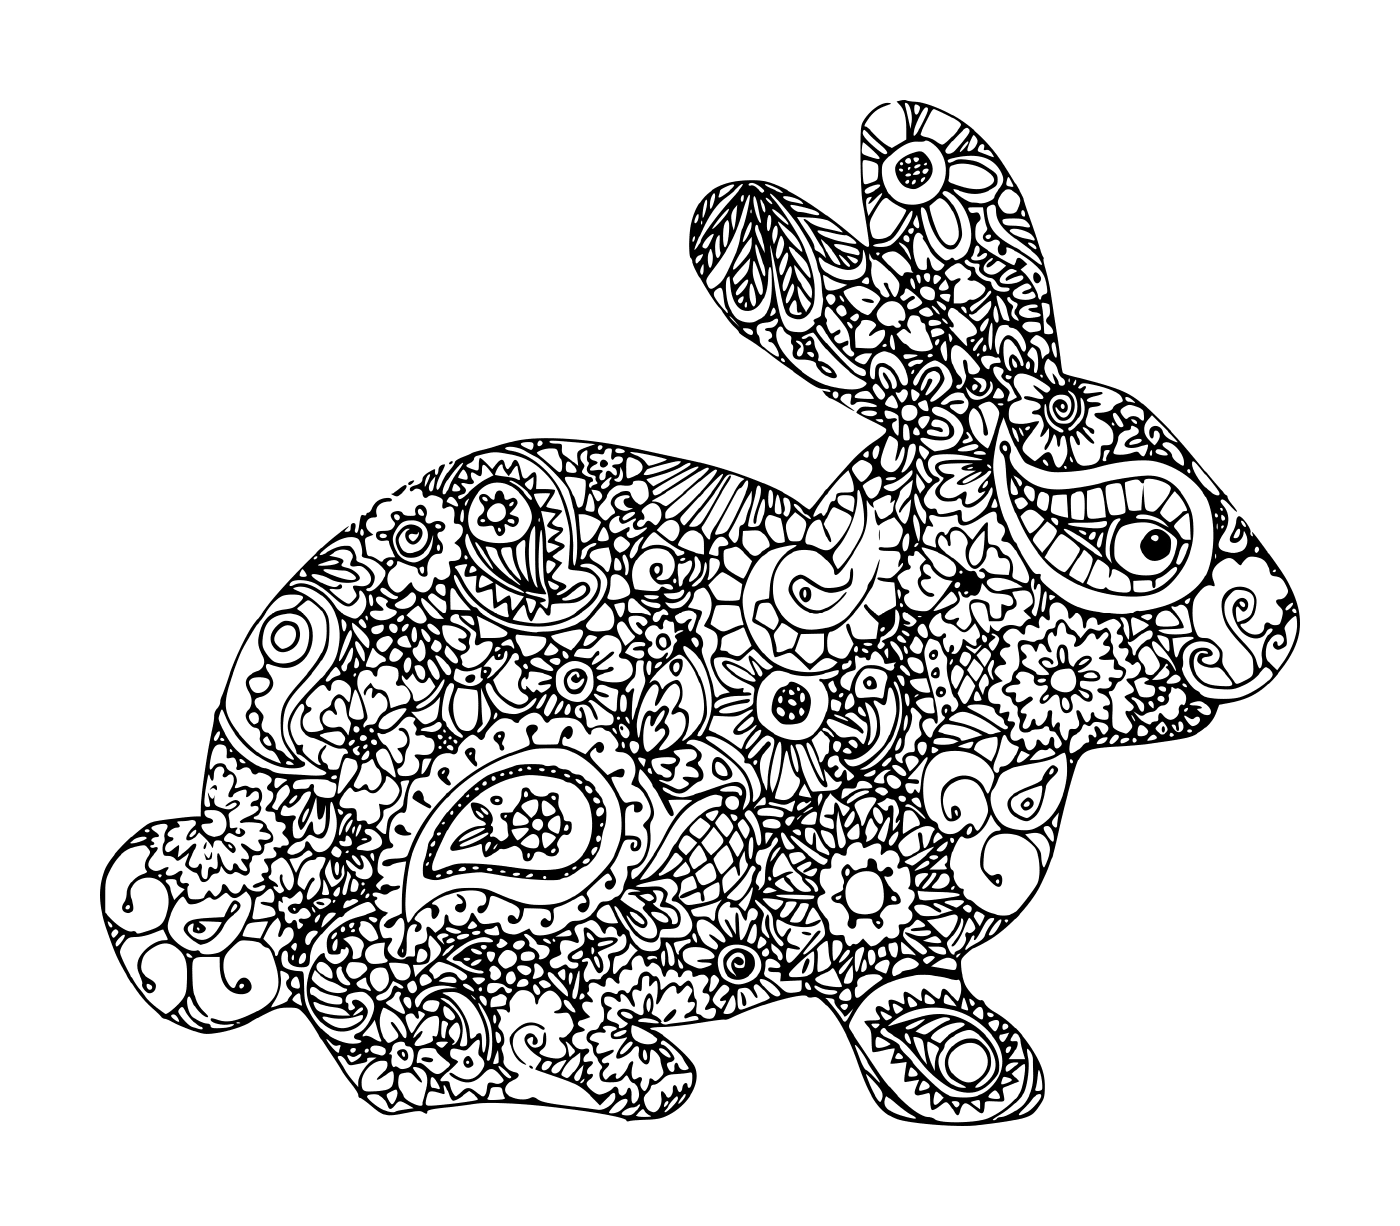  Mandala de conejo 